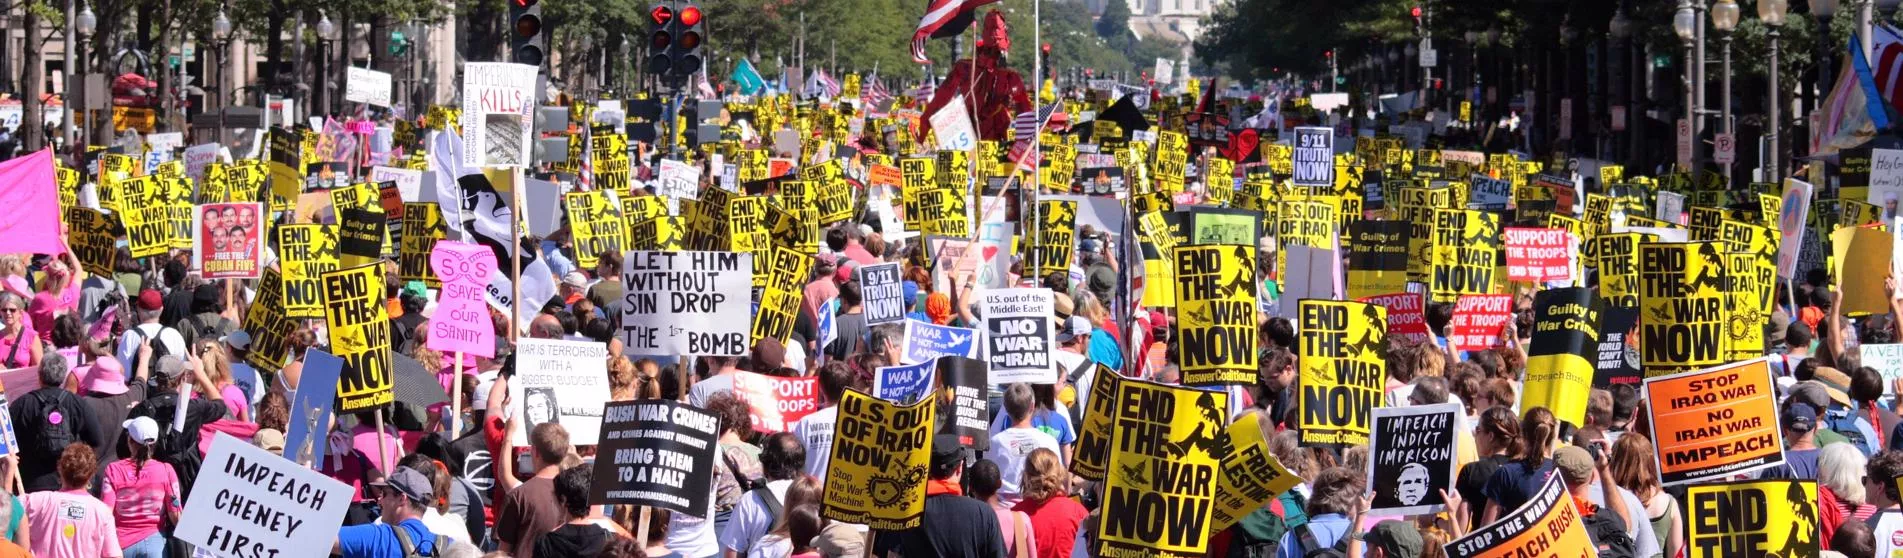 Anti-war protest in Washington